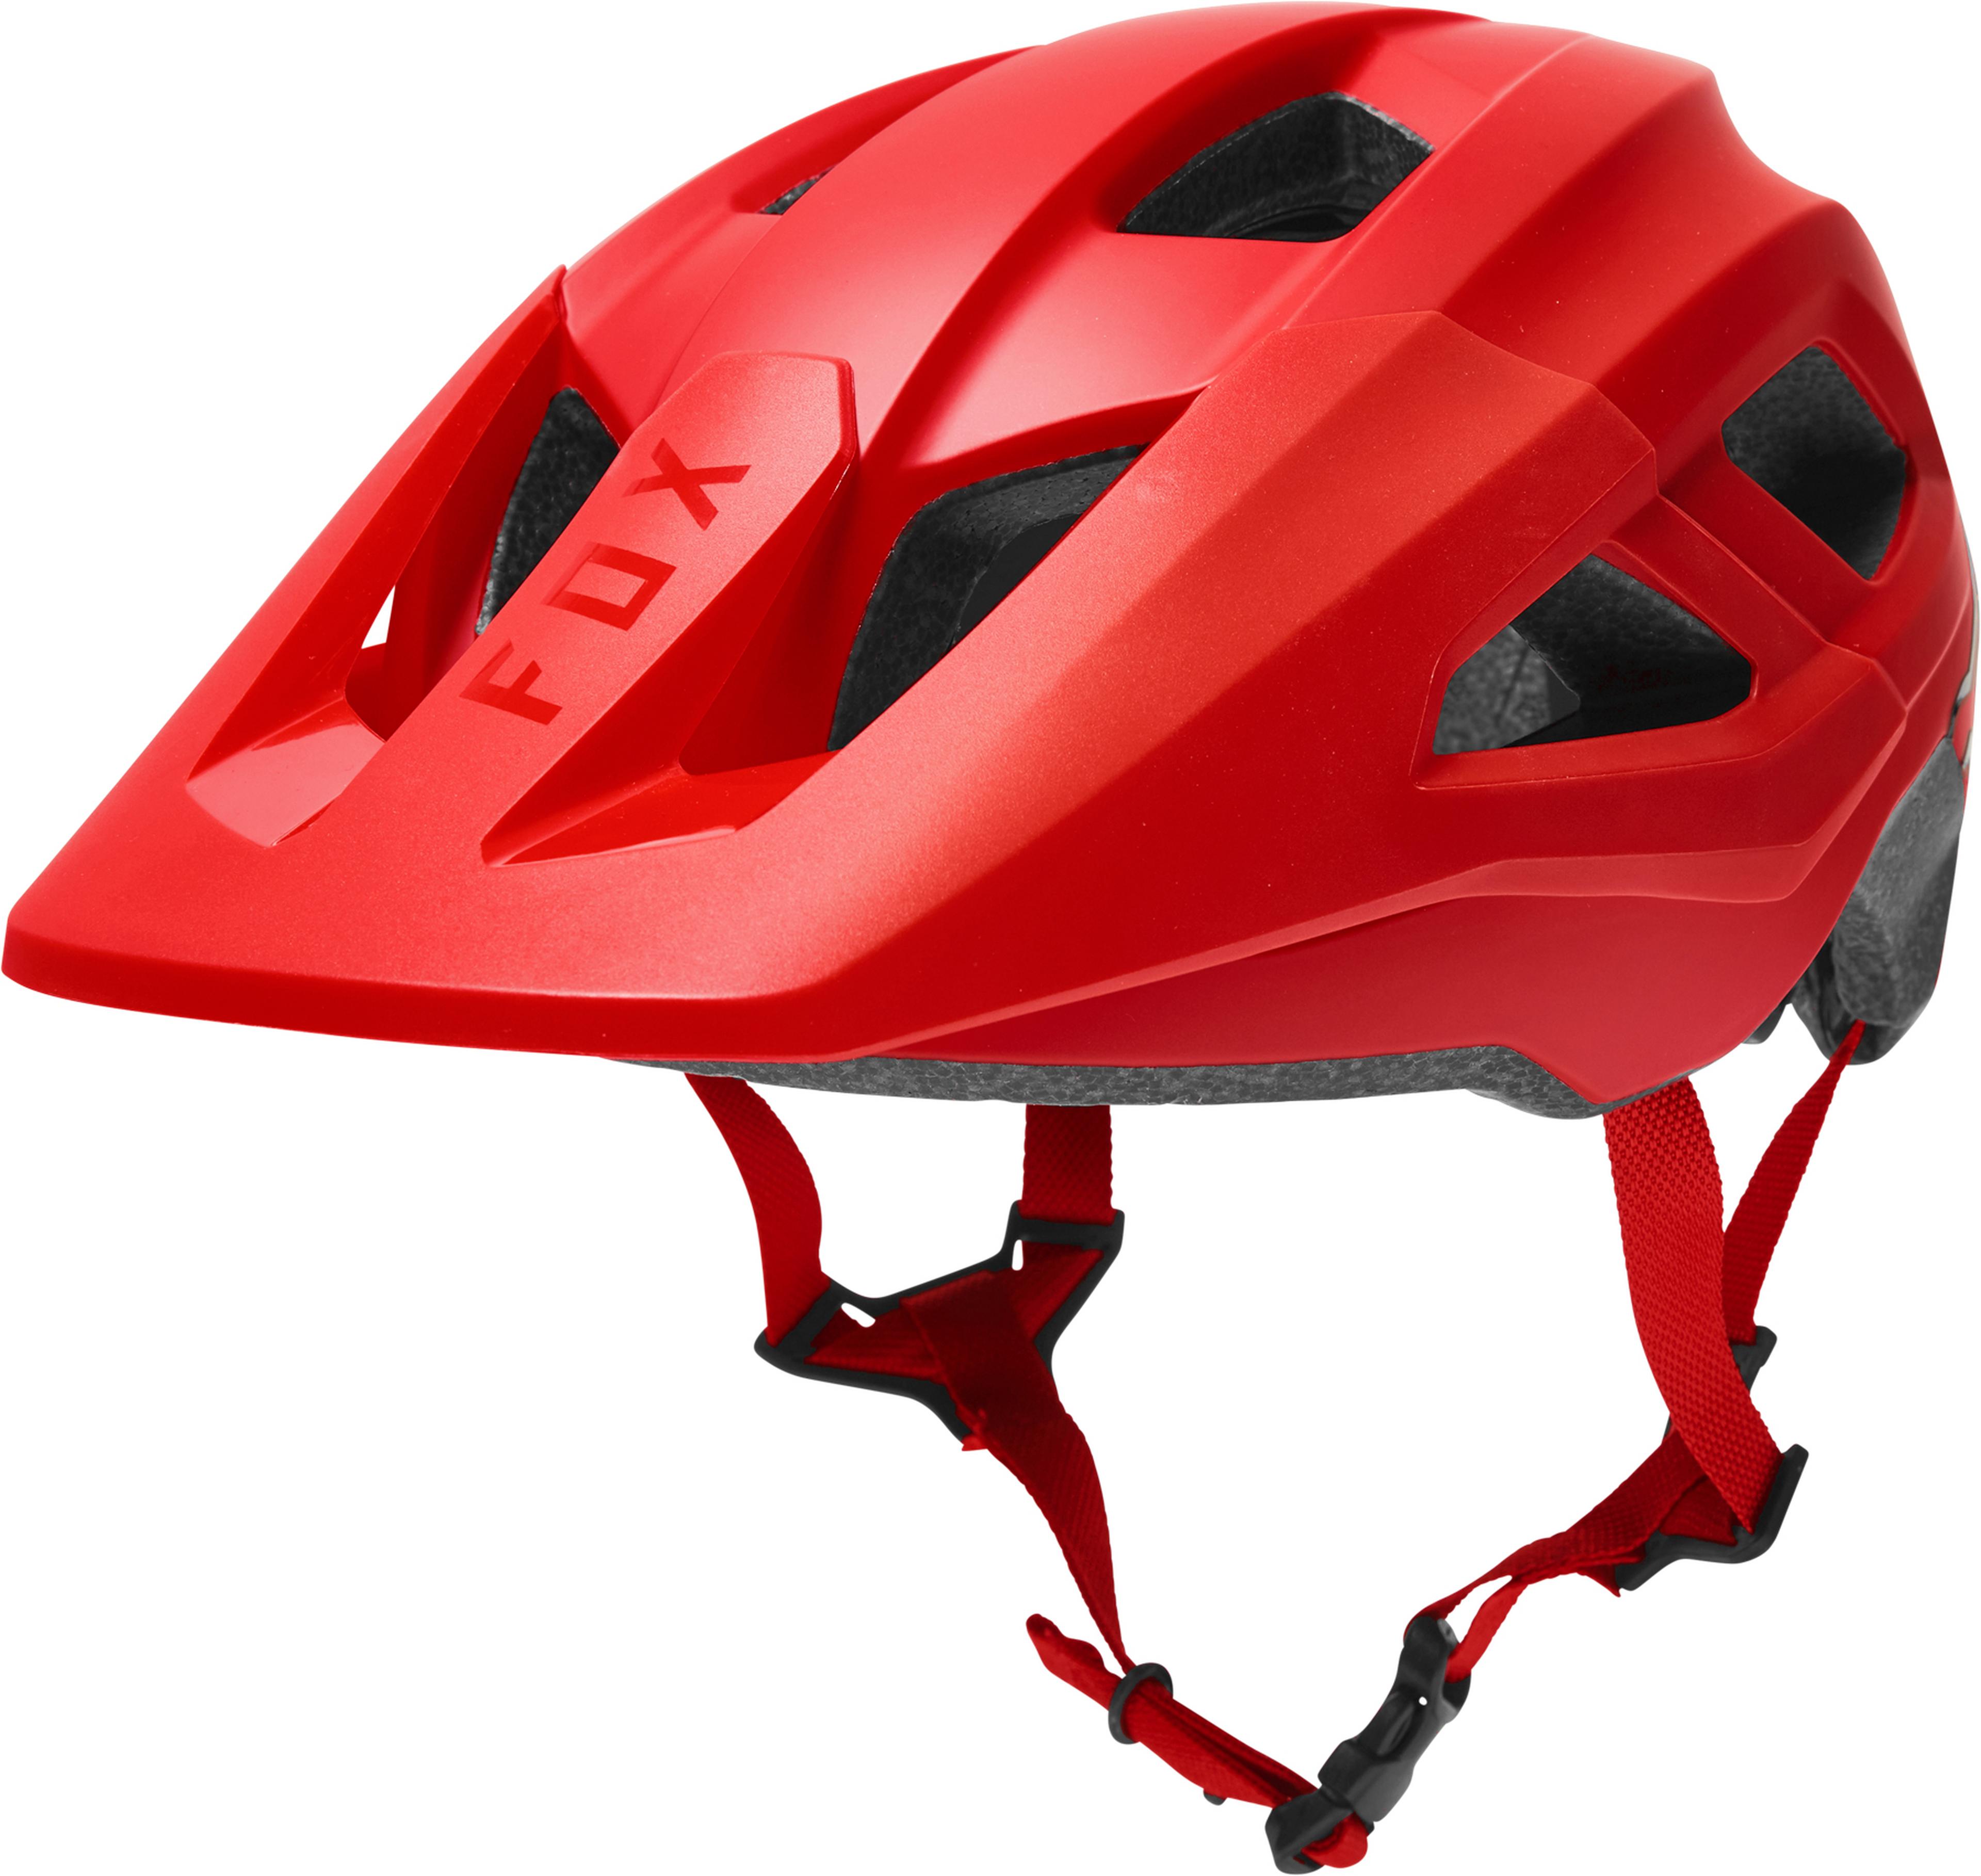 Fox Racing Mainframe Helmet (MIPS)